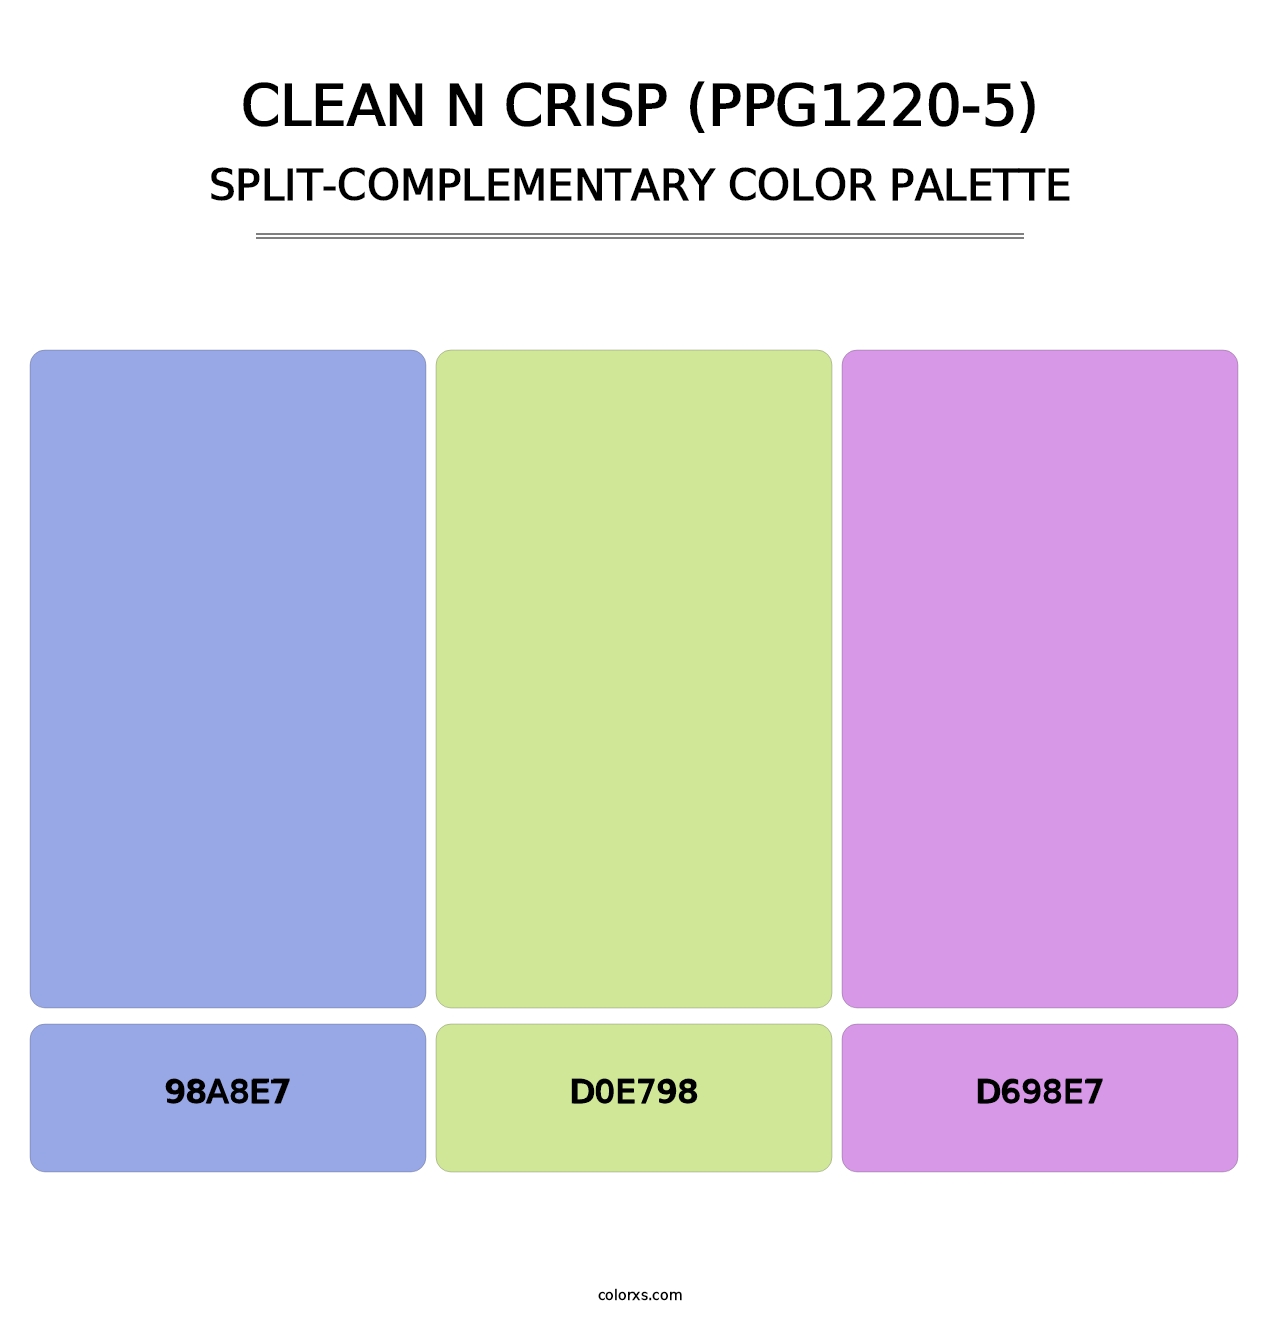 Clean N Crisp (PPG1220-5) - Split-Complementary Color Palette